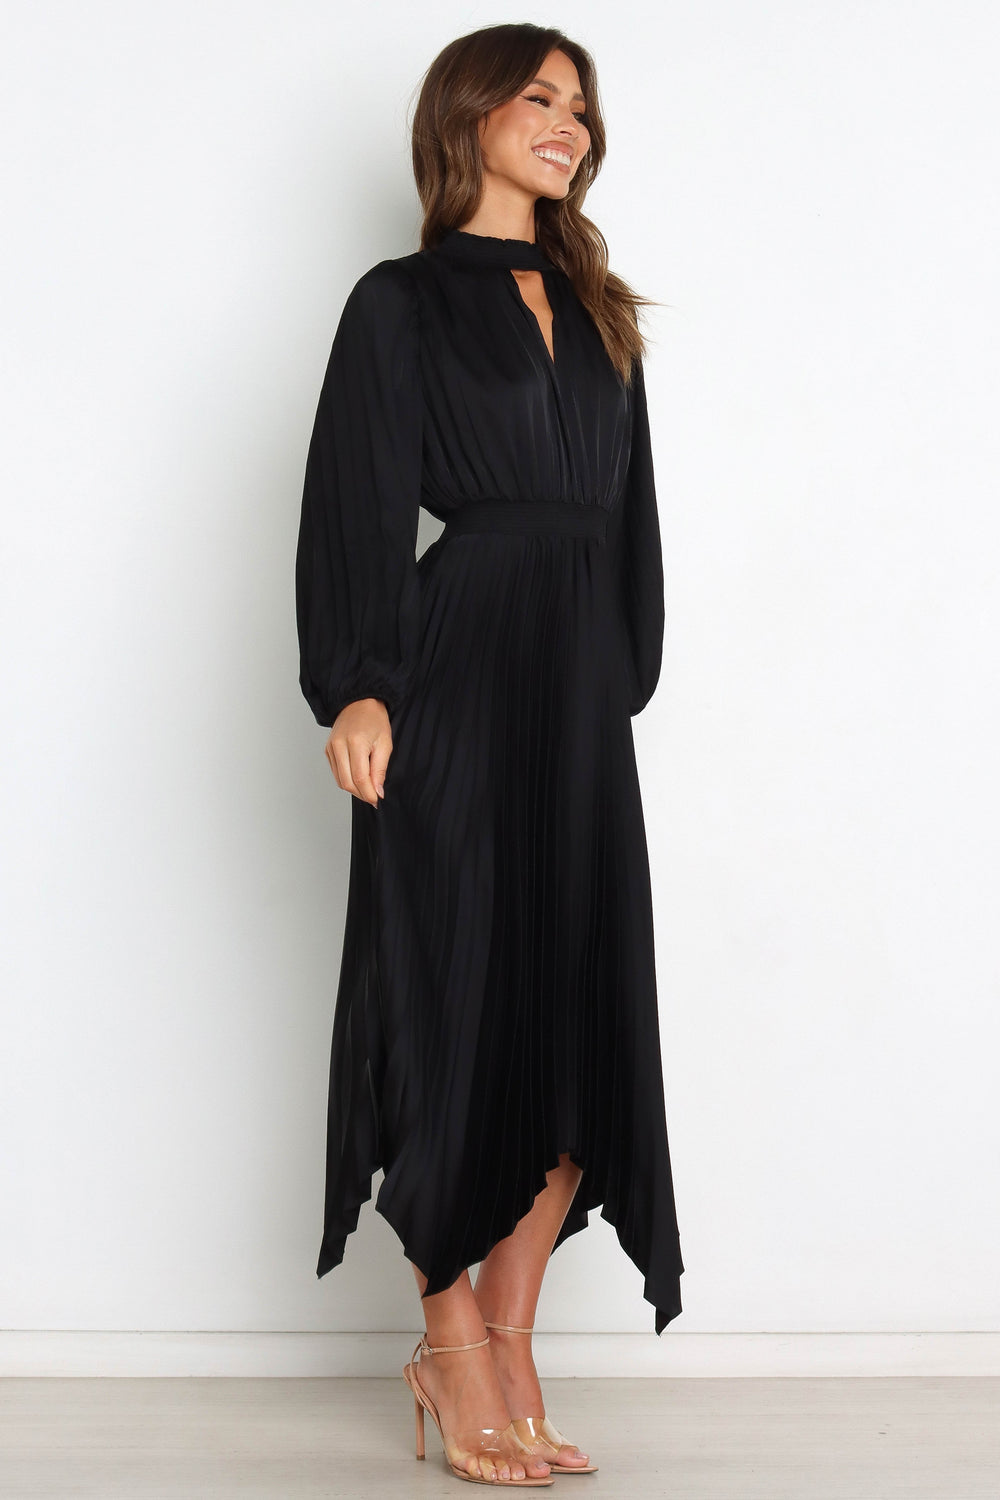 Shop Formal Dress - Eloise Dress - Black sixth image